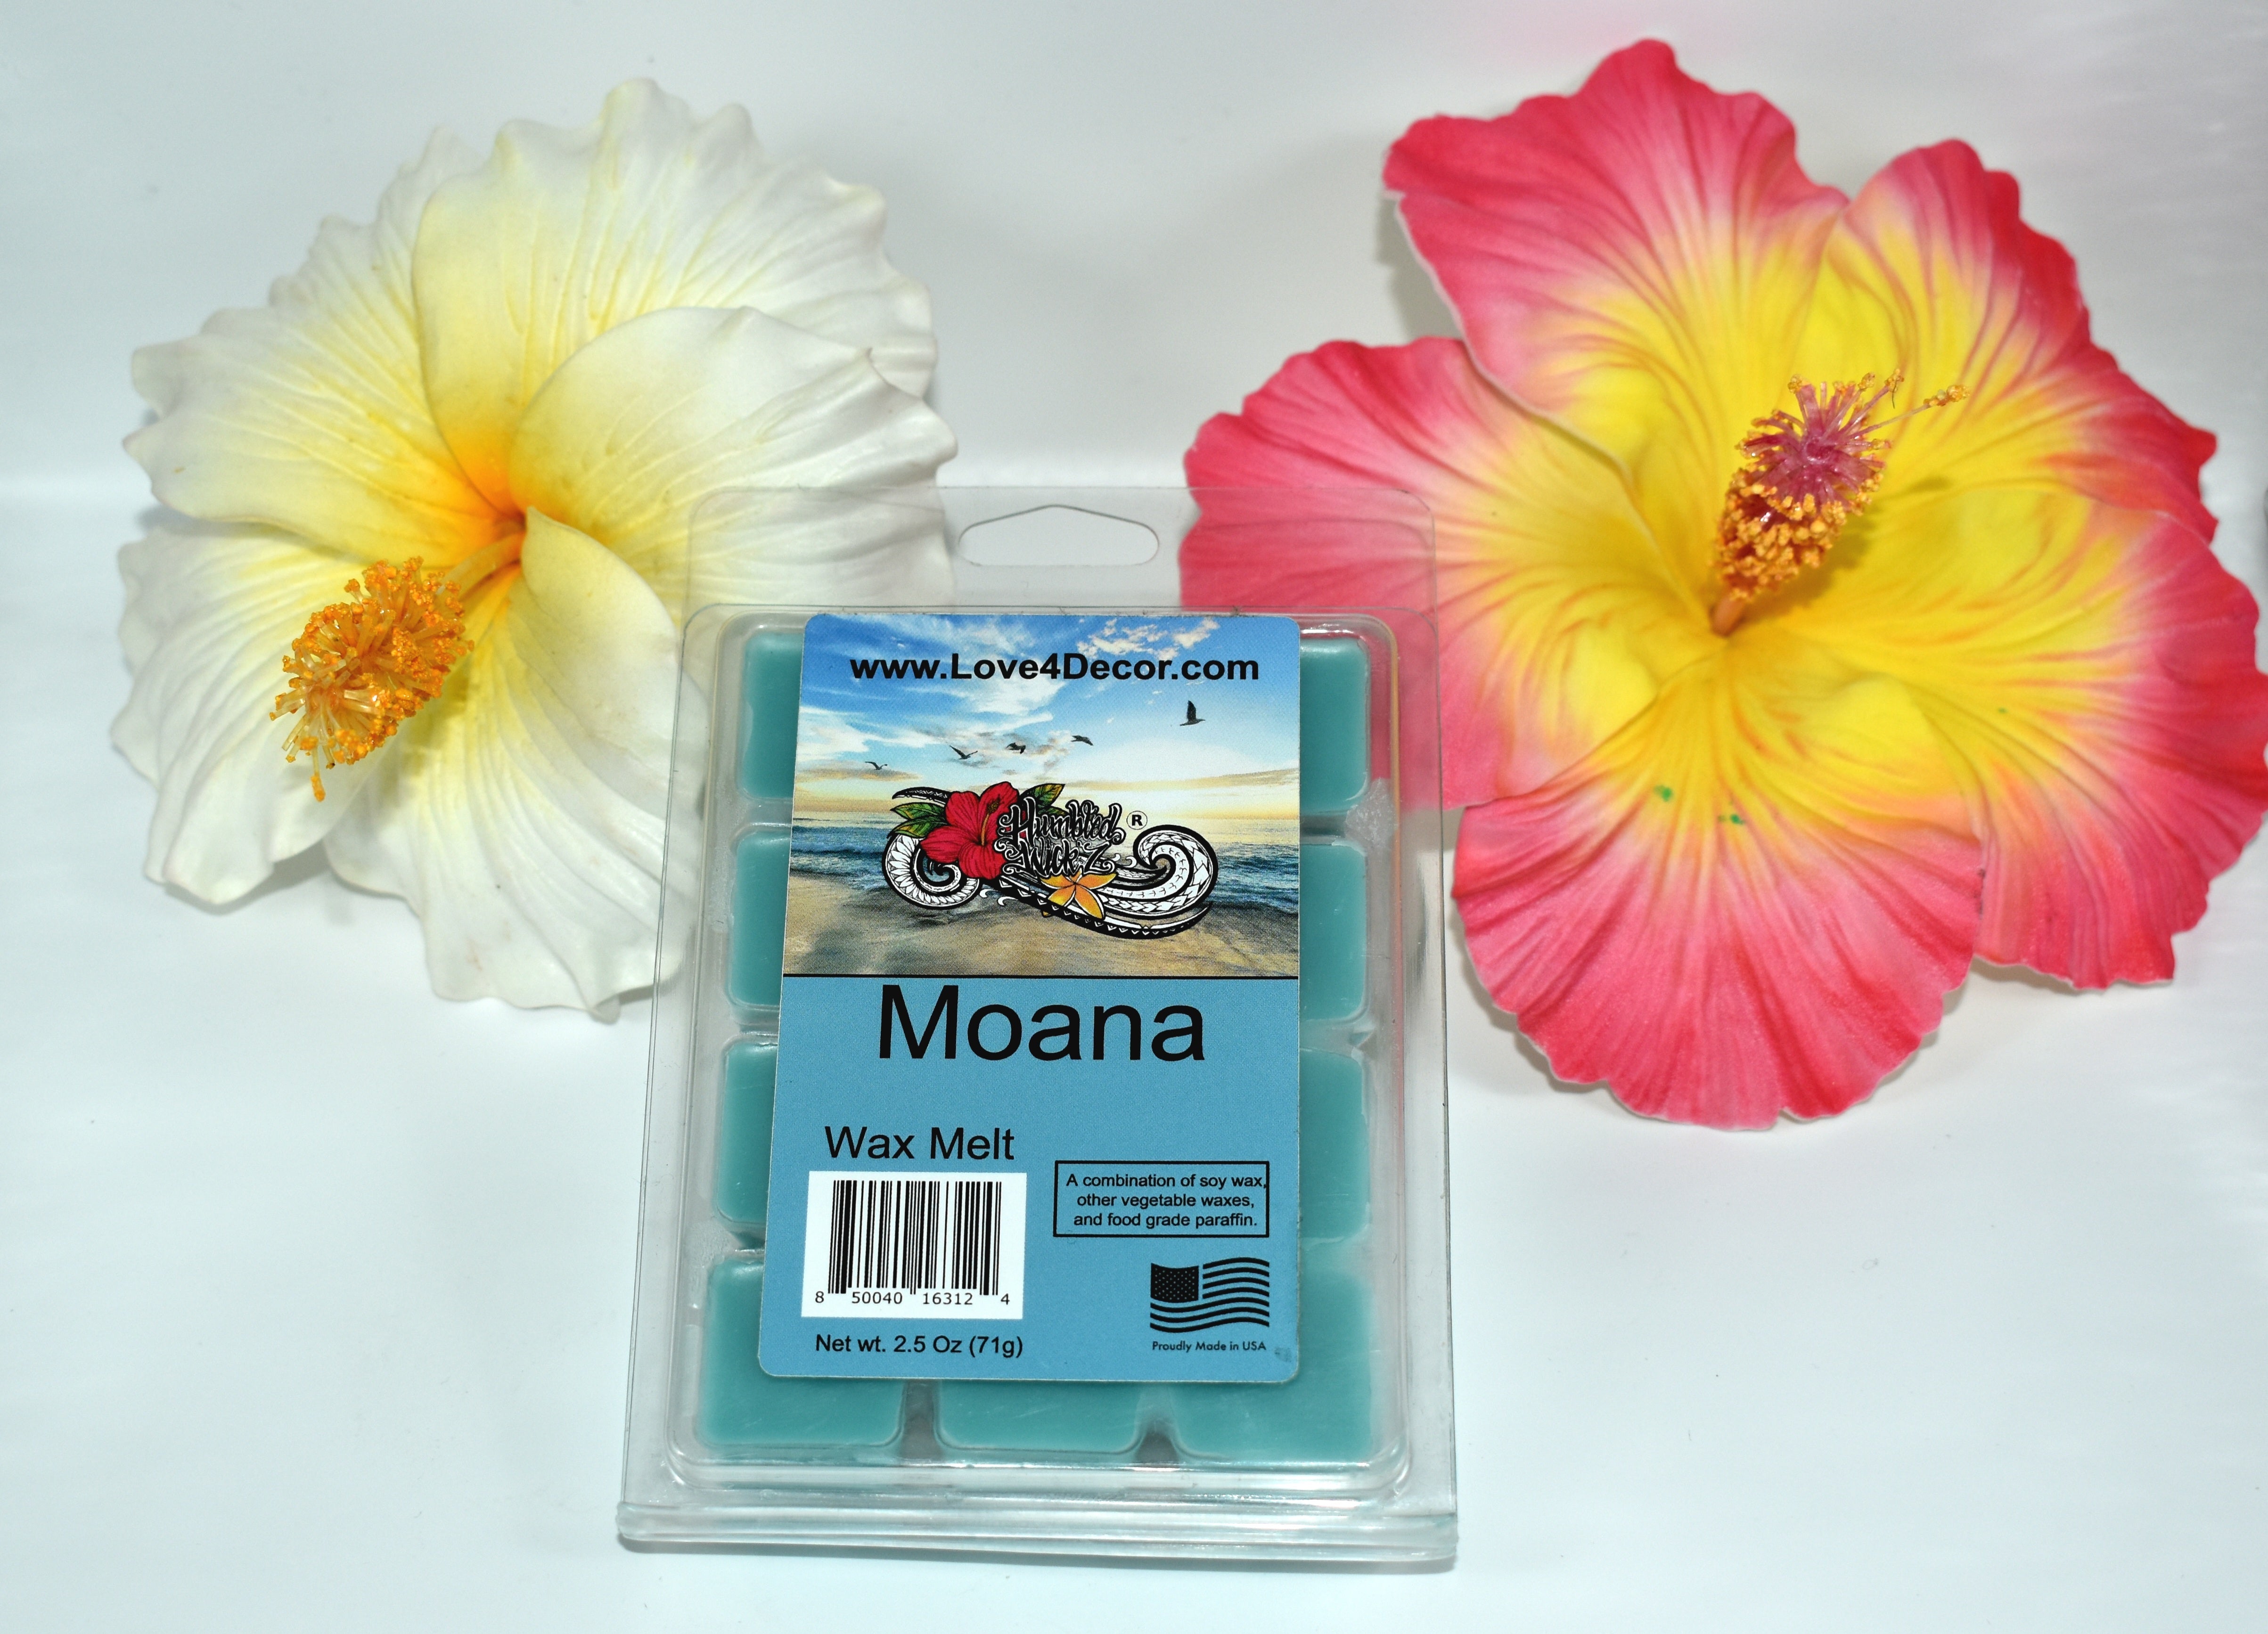 The Moana Scent